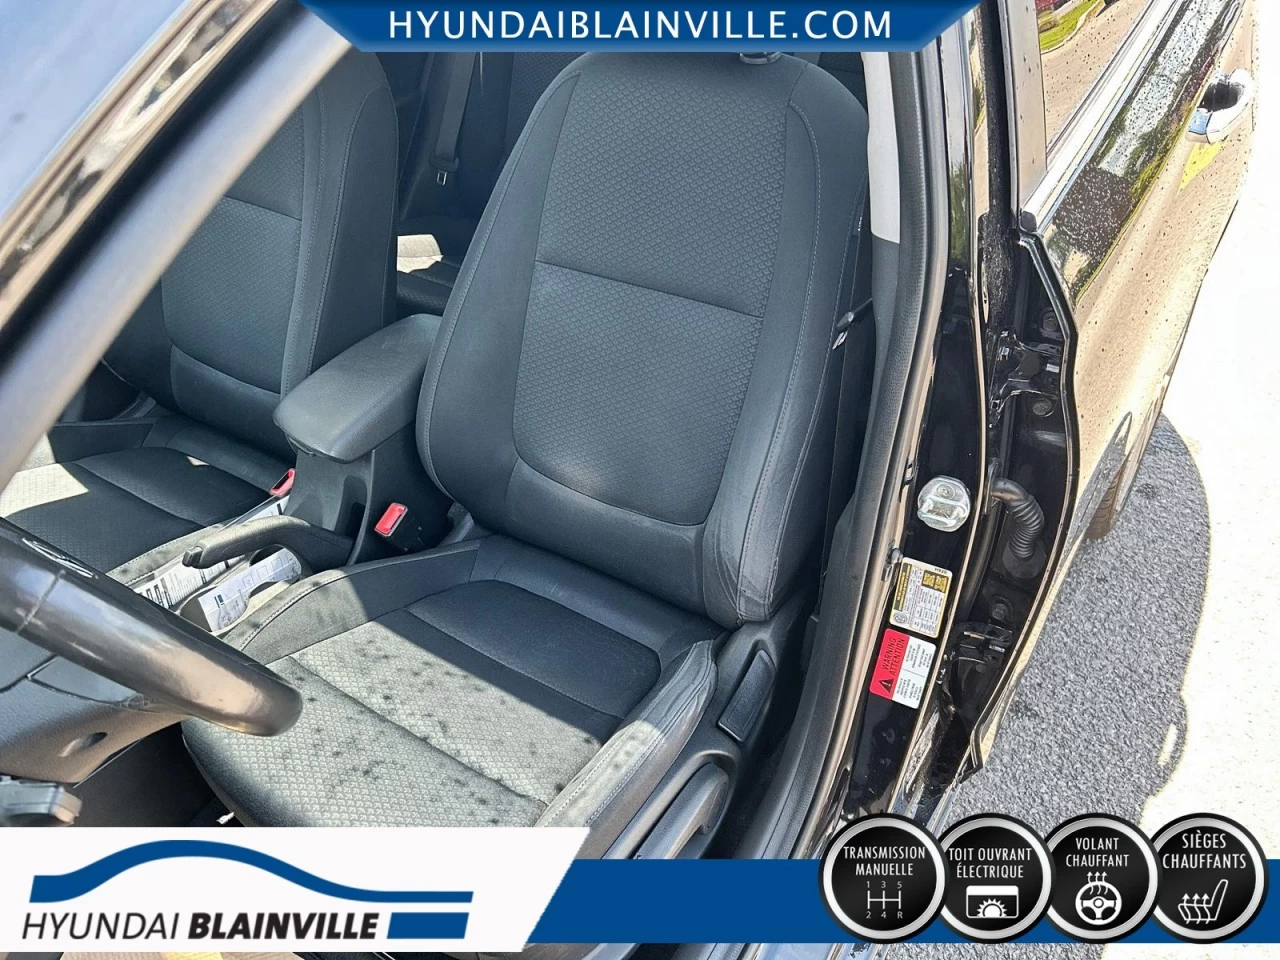 2019 Hyundai Accent ULTIMATE, MANUELLE, TOIT OUVRANT+ Main Image